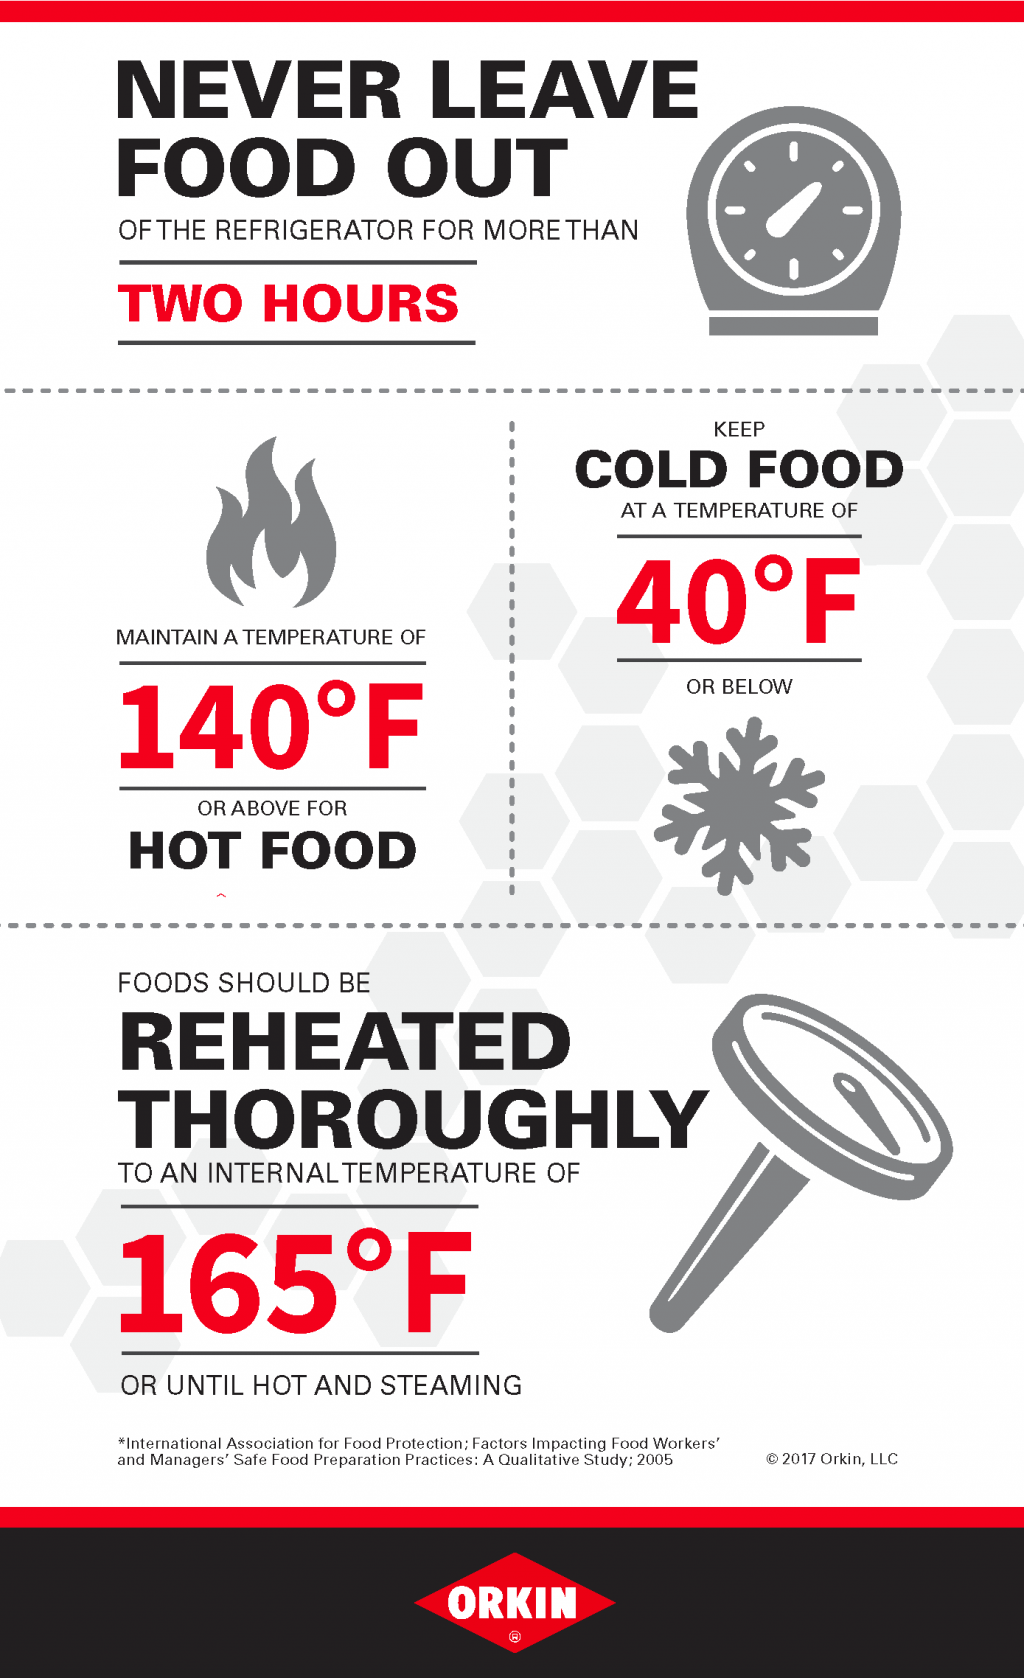 Pressure / Temperature Sign - Keep Hot Foods Hot Maintain